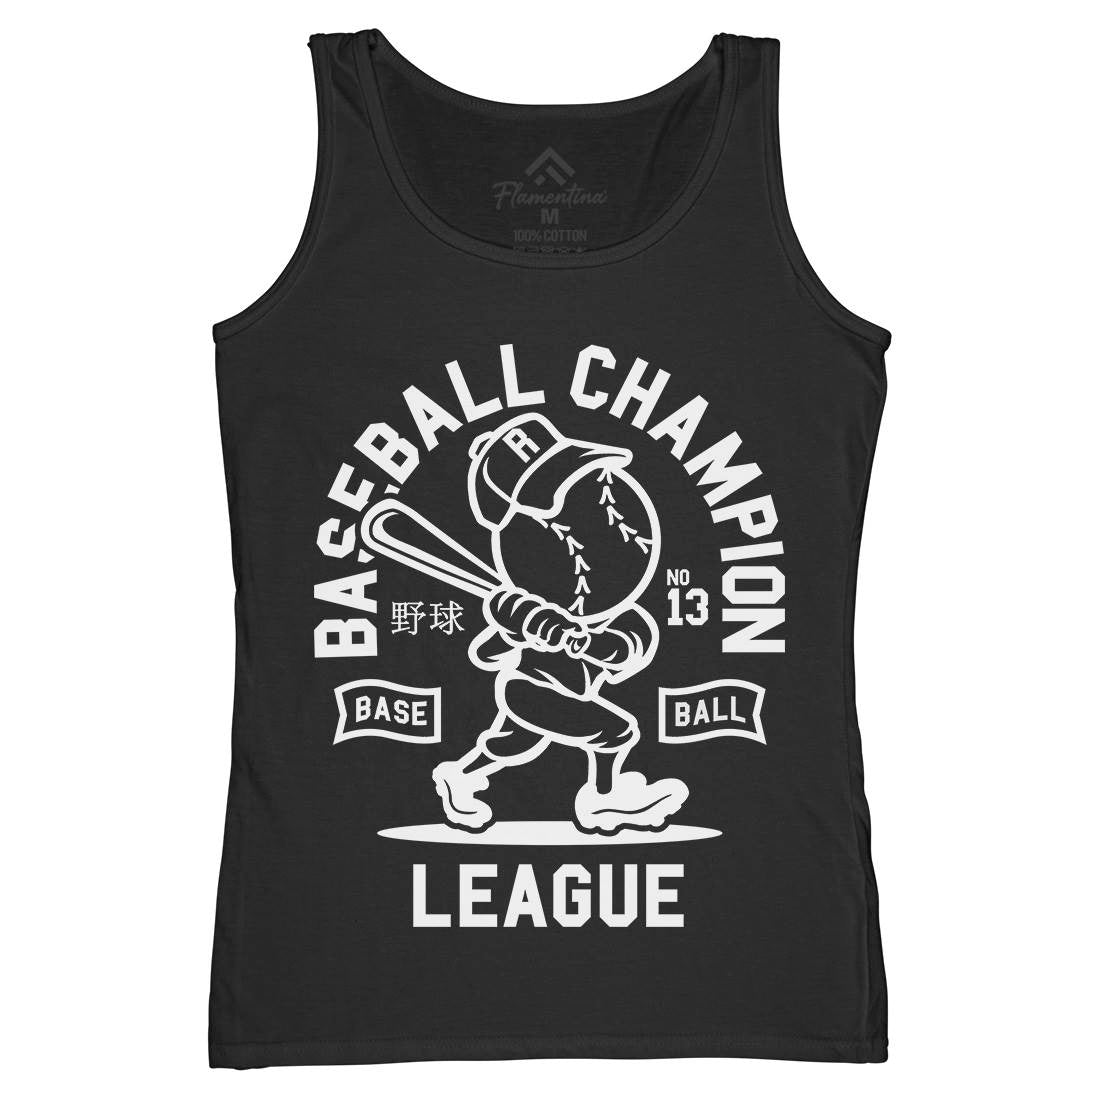 Baseball Champion Womens Organic Tank Top Vest Sport A204